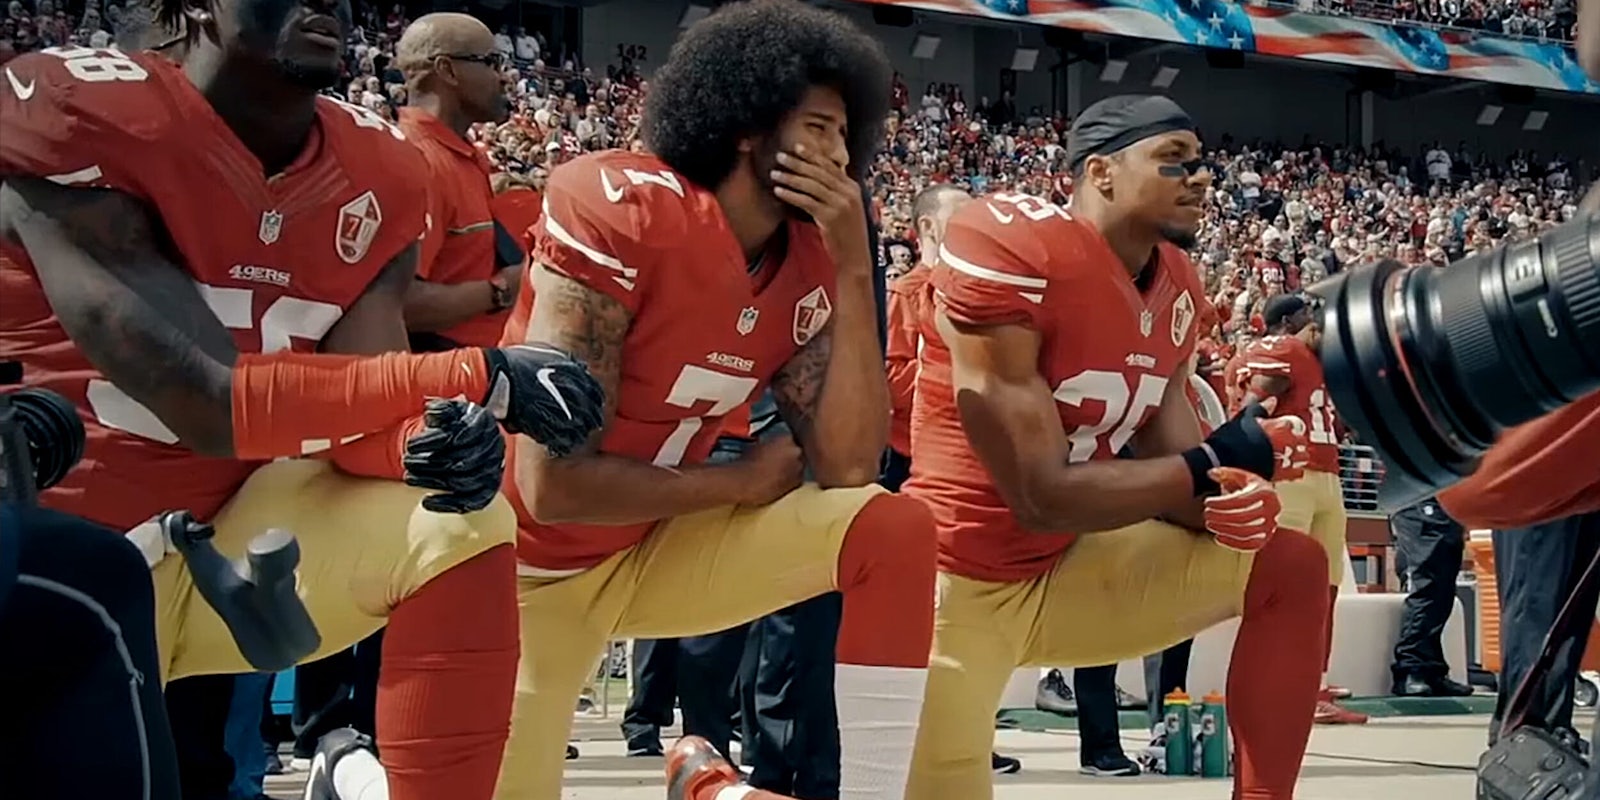 Colin Kaepernick kneeling during National Anthem